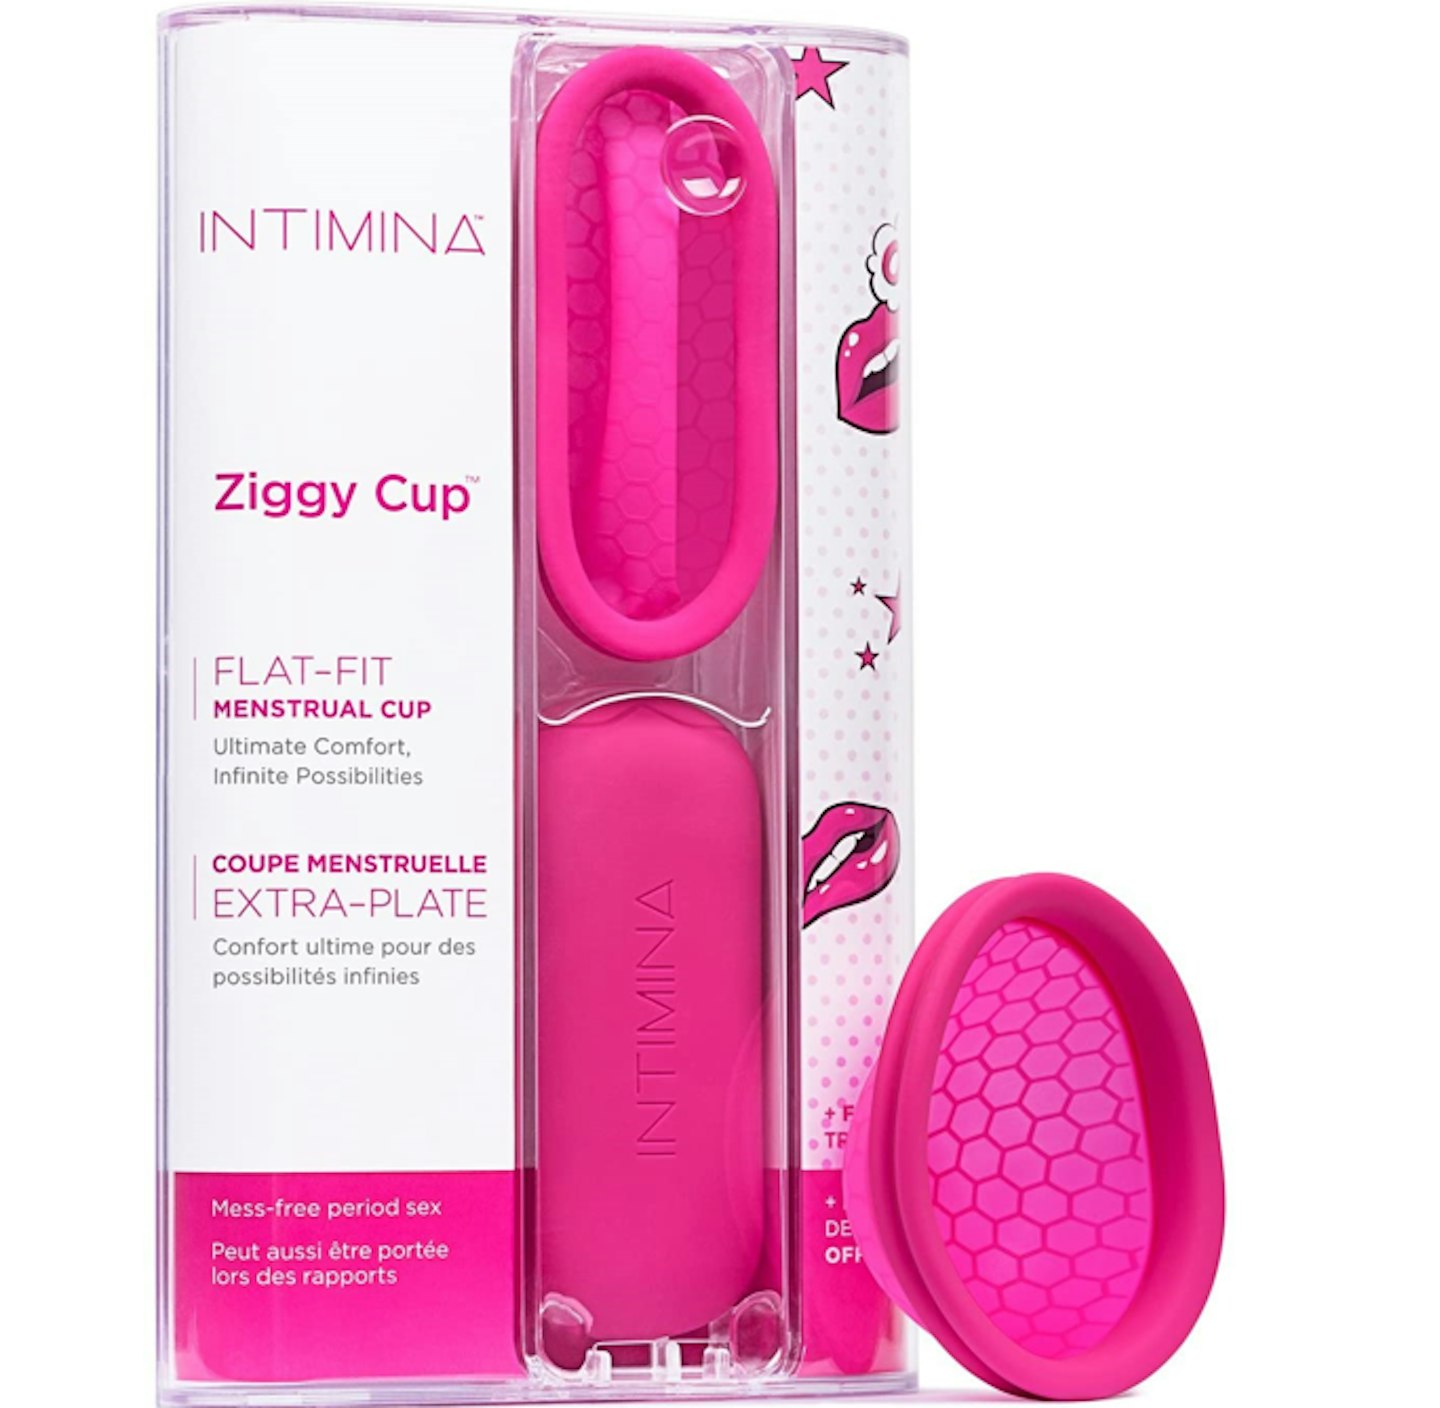 Intimina Ziggy Cup - Super Thin Reusable Menstrual Cup